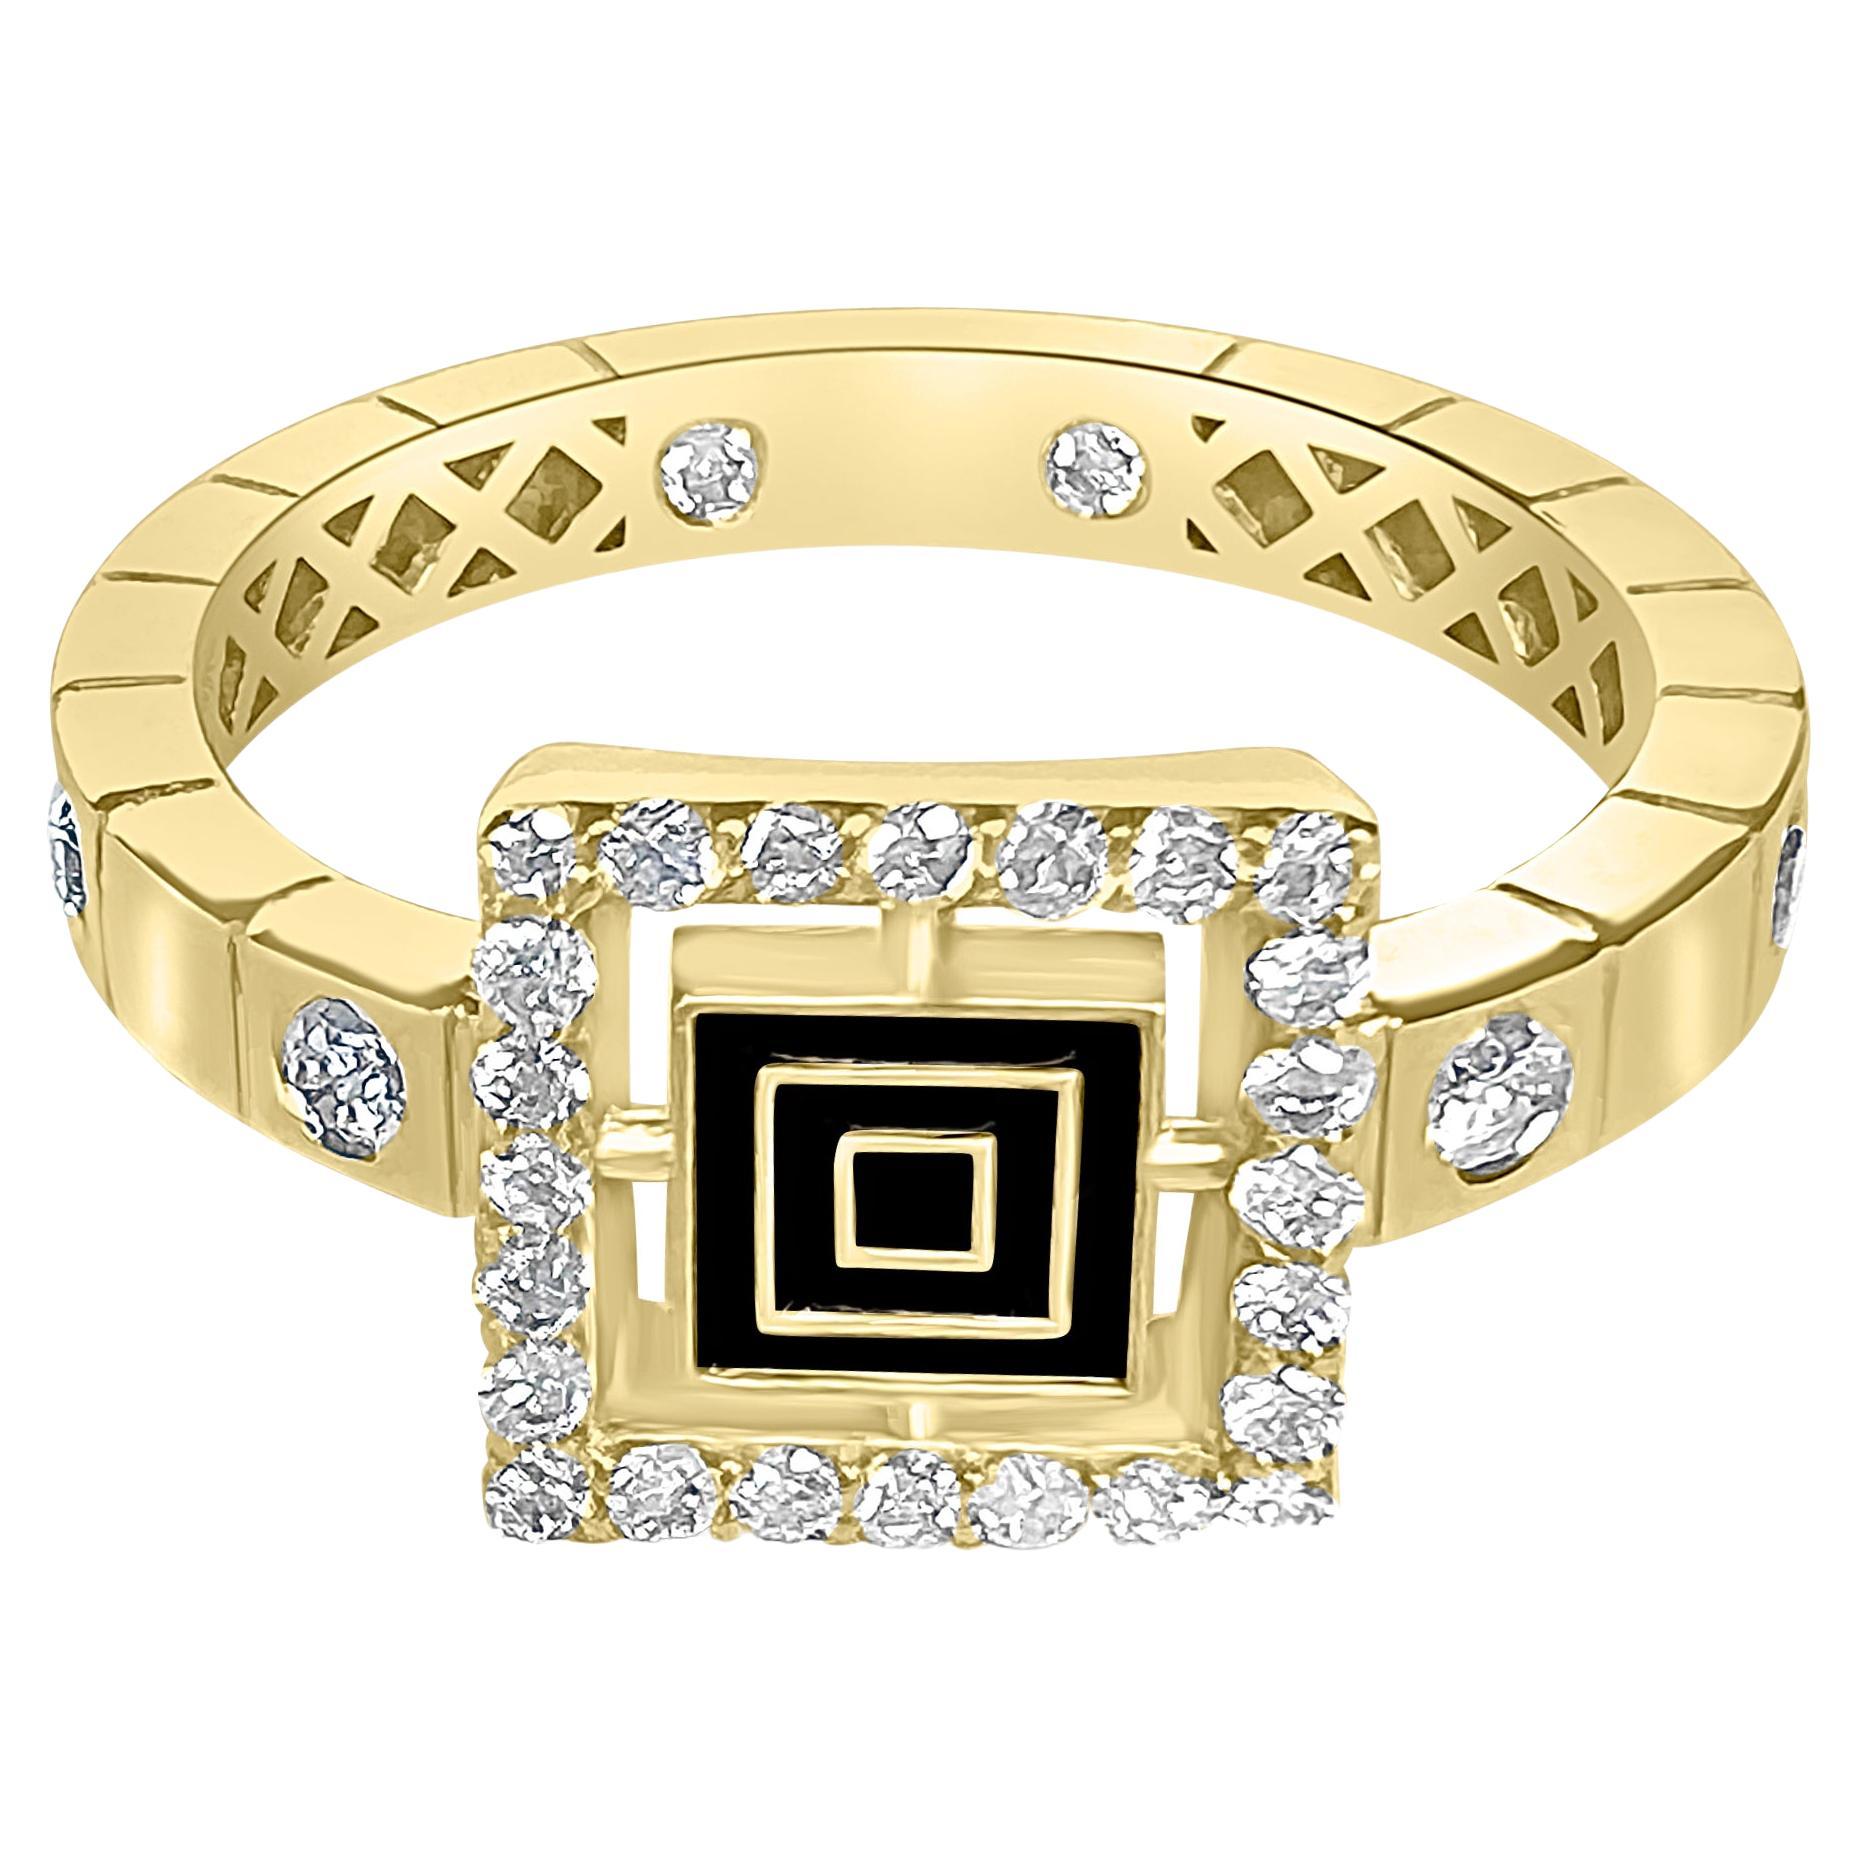 Architectural Shape Square Enamel Fashion Diamond Ring sz 7